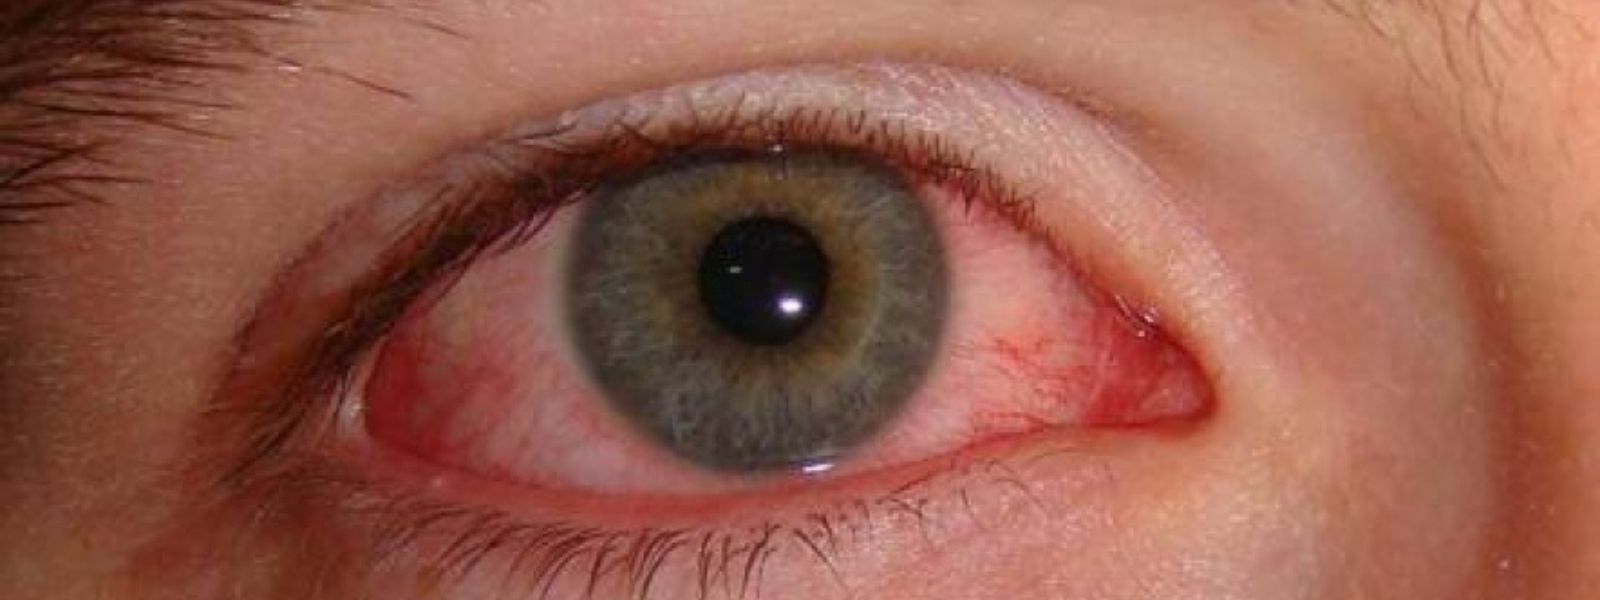 Eye disease spreading in Sri Lanka